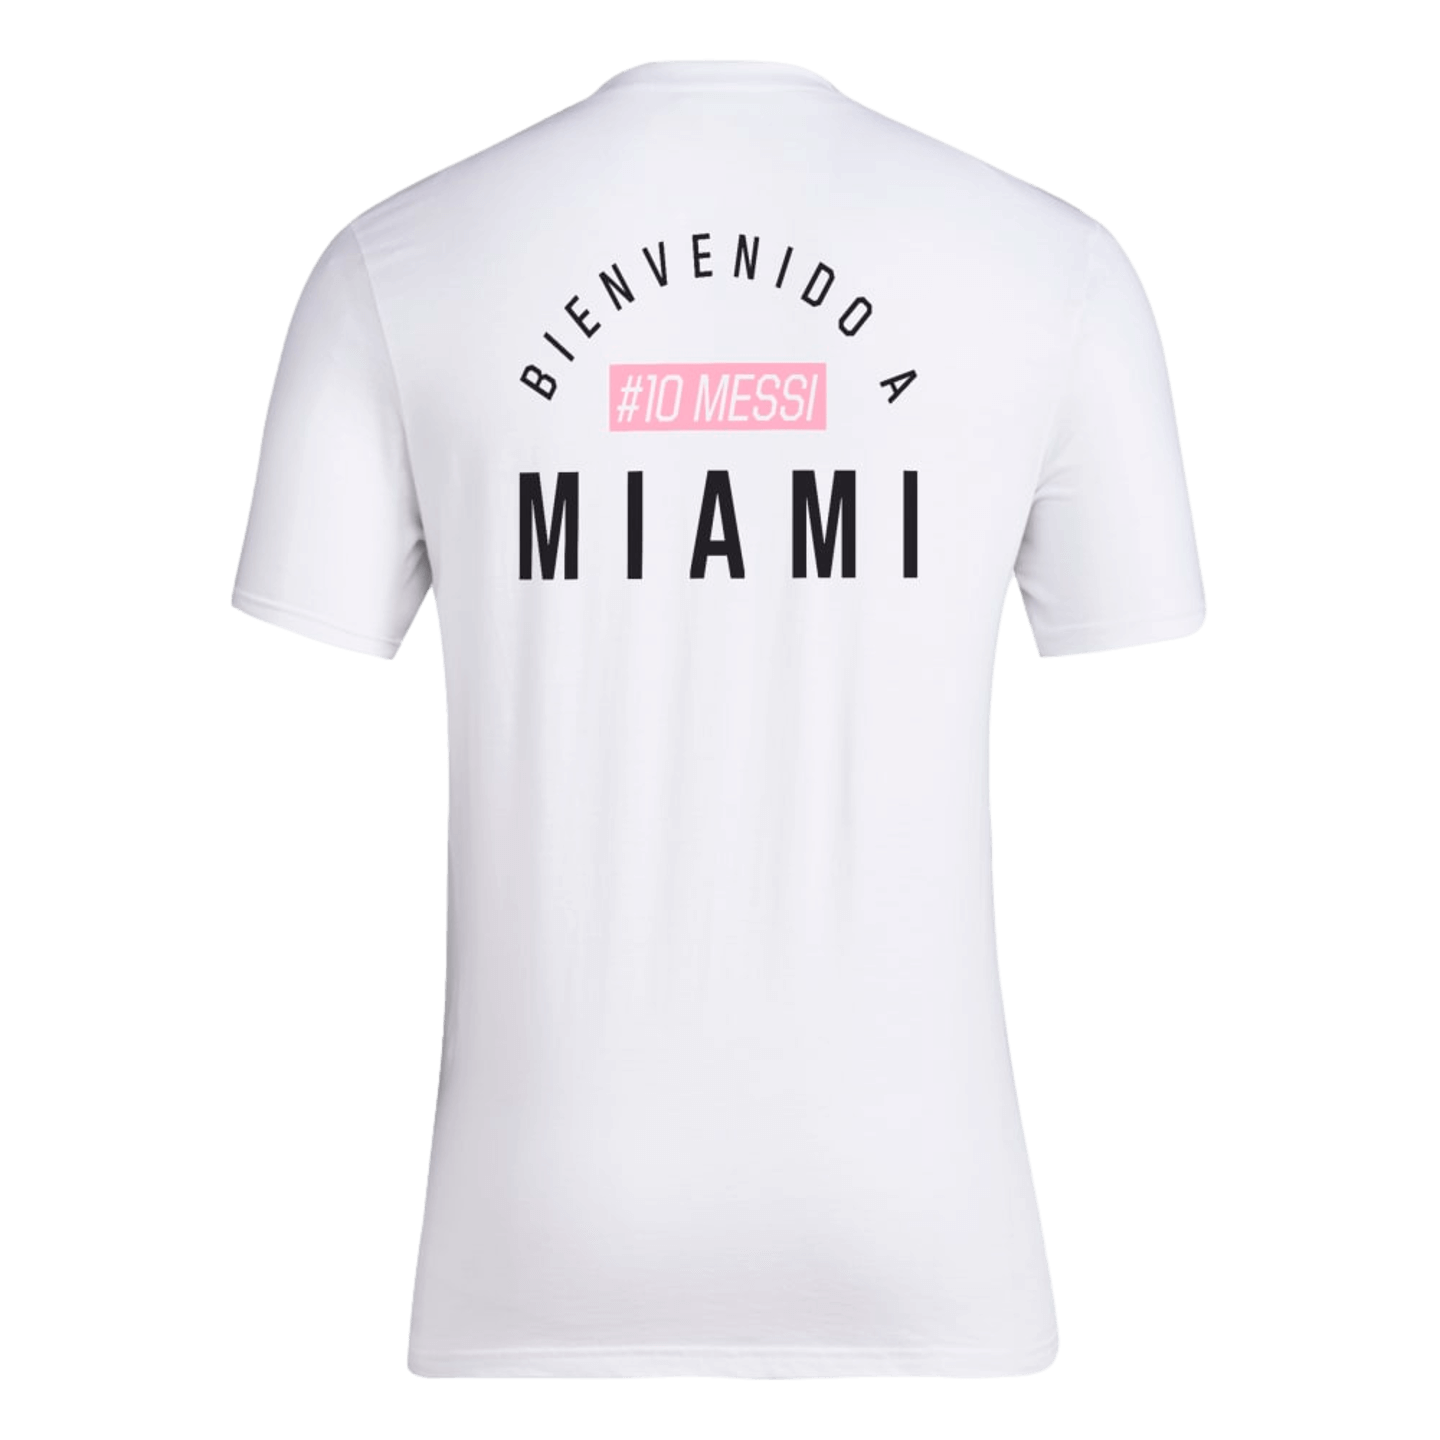 Camiseta Adidas Bienvenido a Miami Messi